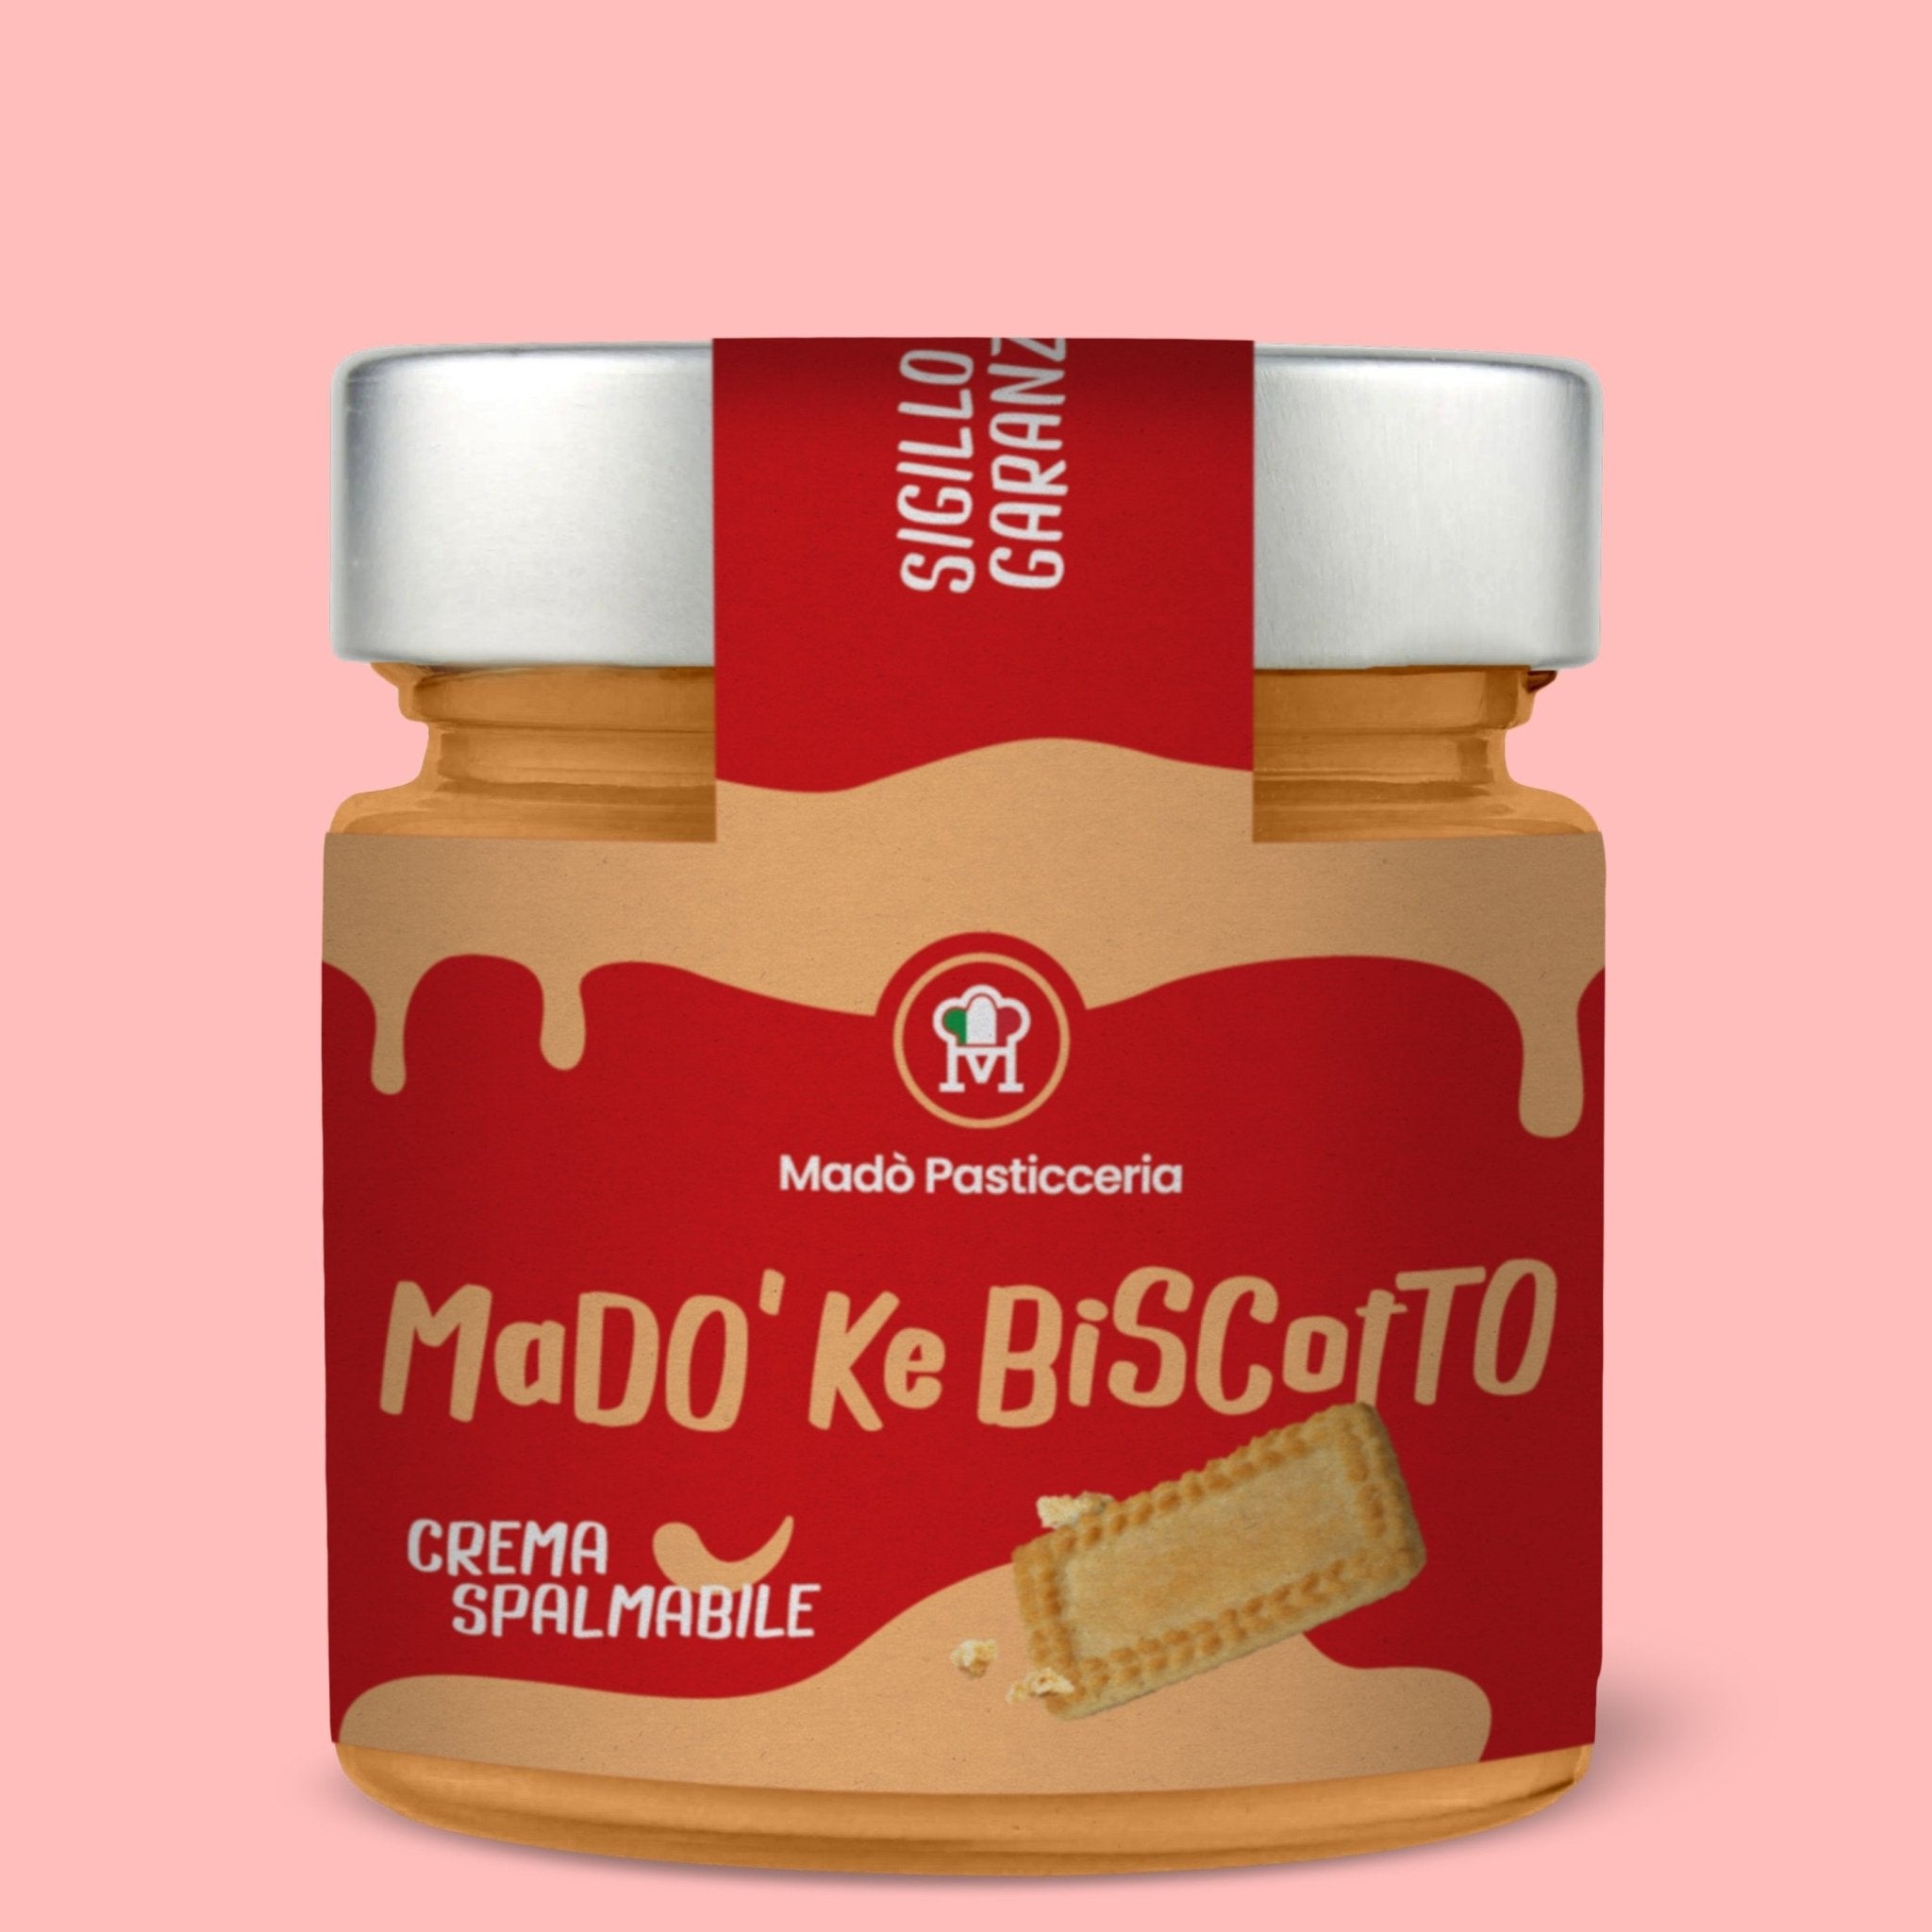 Crema spalmabile "Madò Ke Biscotto" - Madò Pasticceria